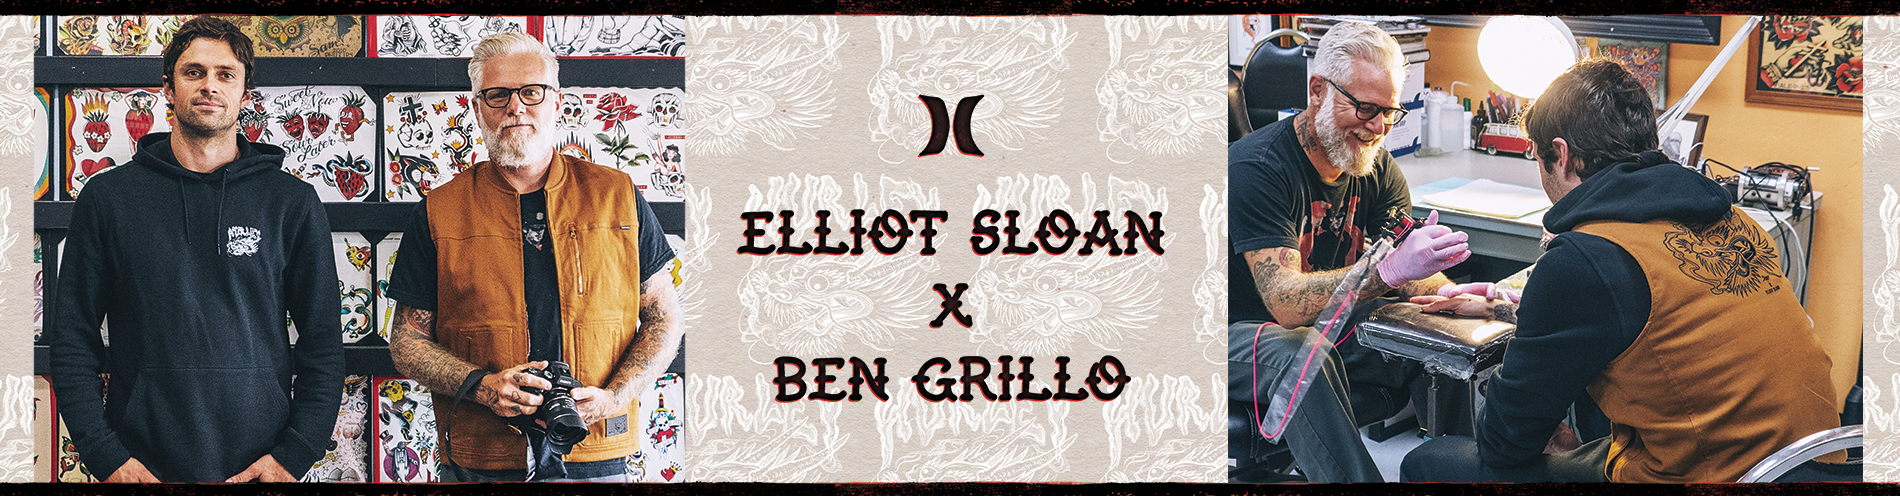 Elliot Sloan x Ben Grillo